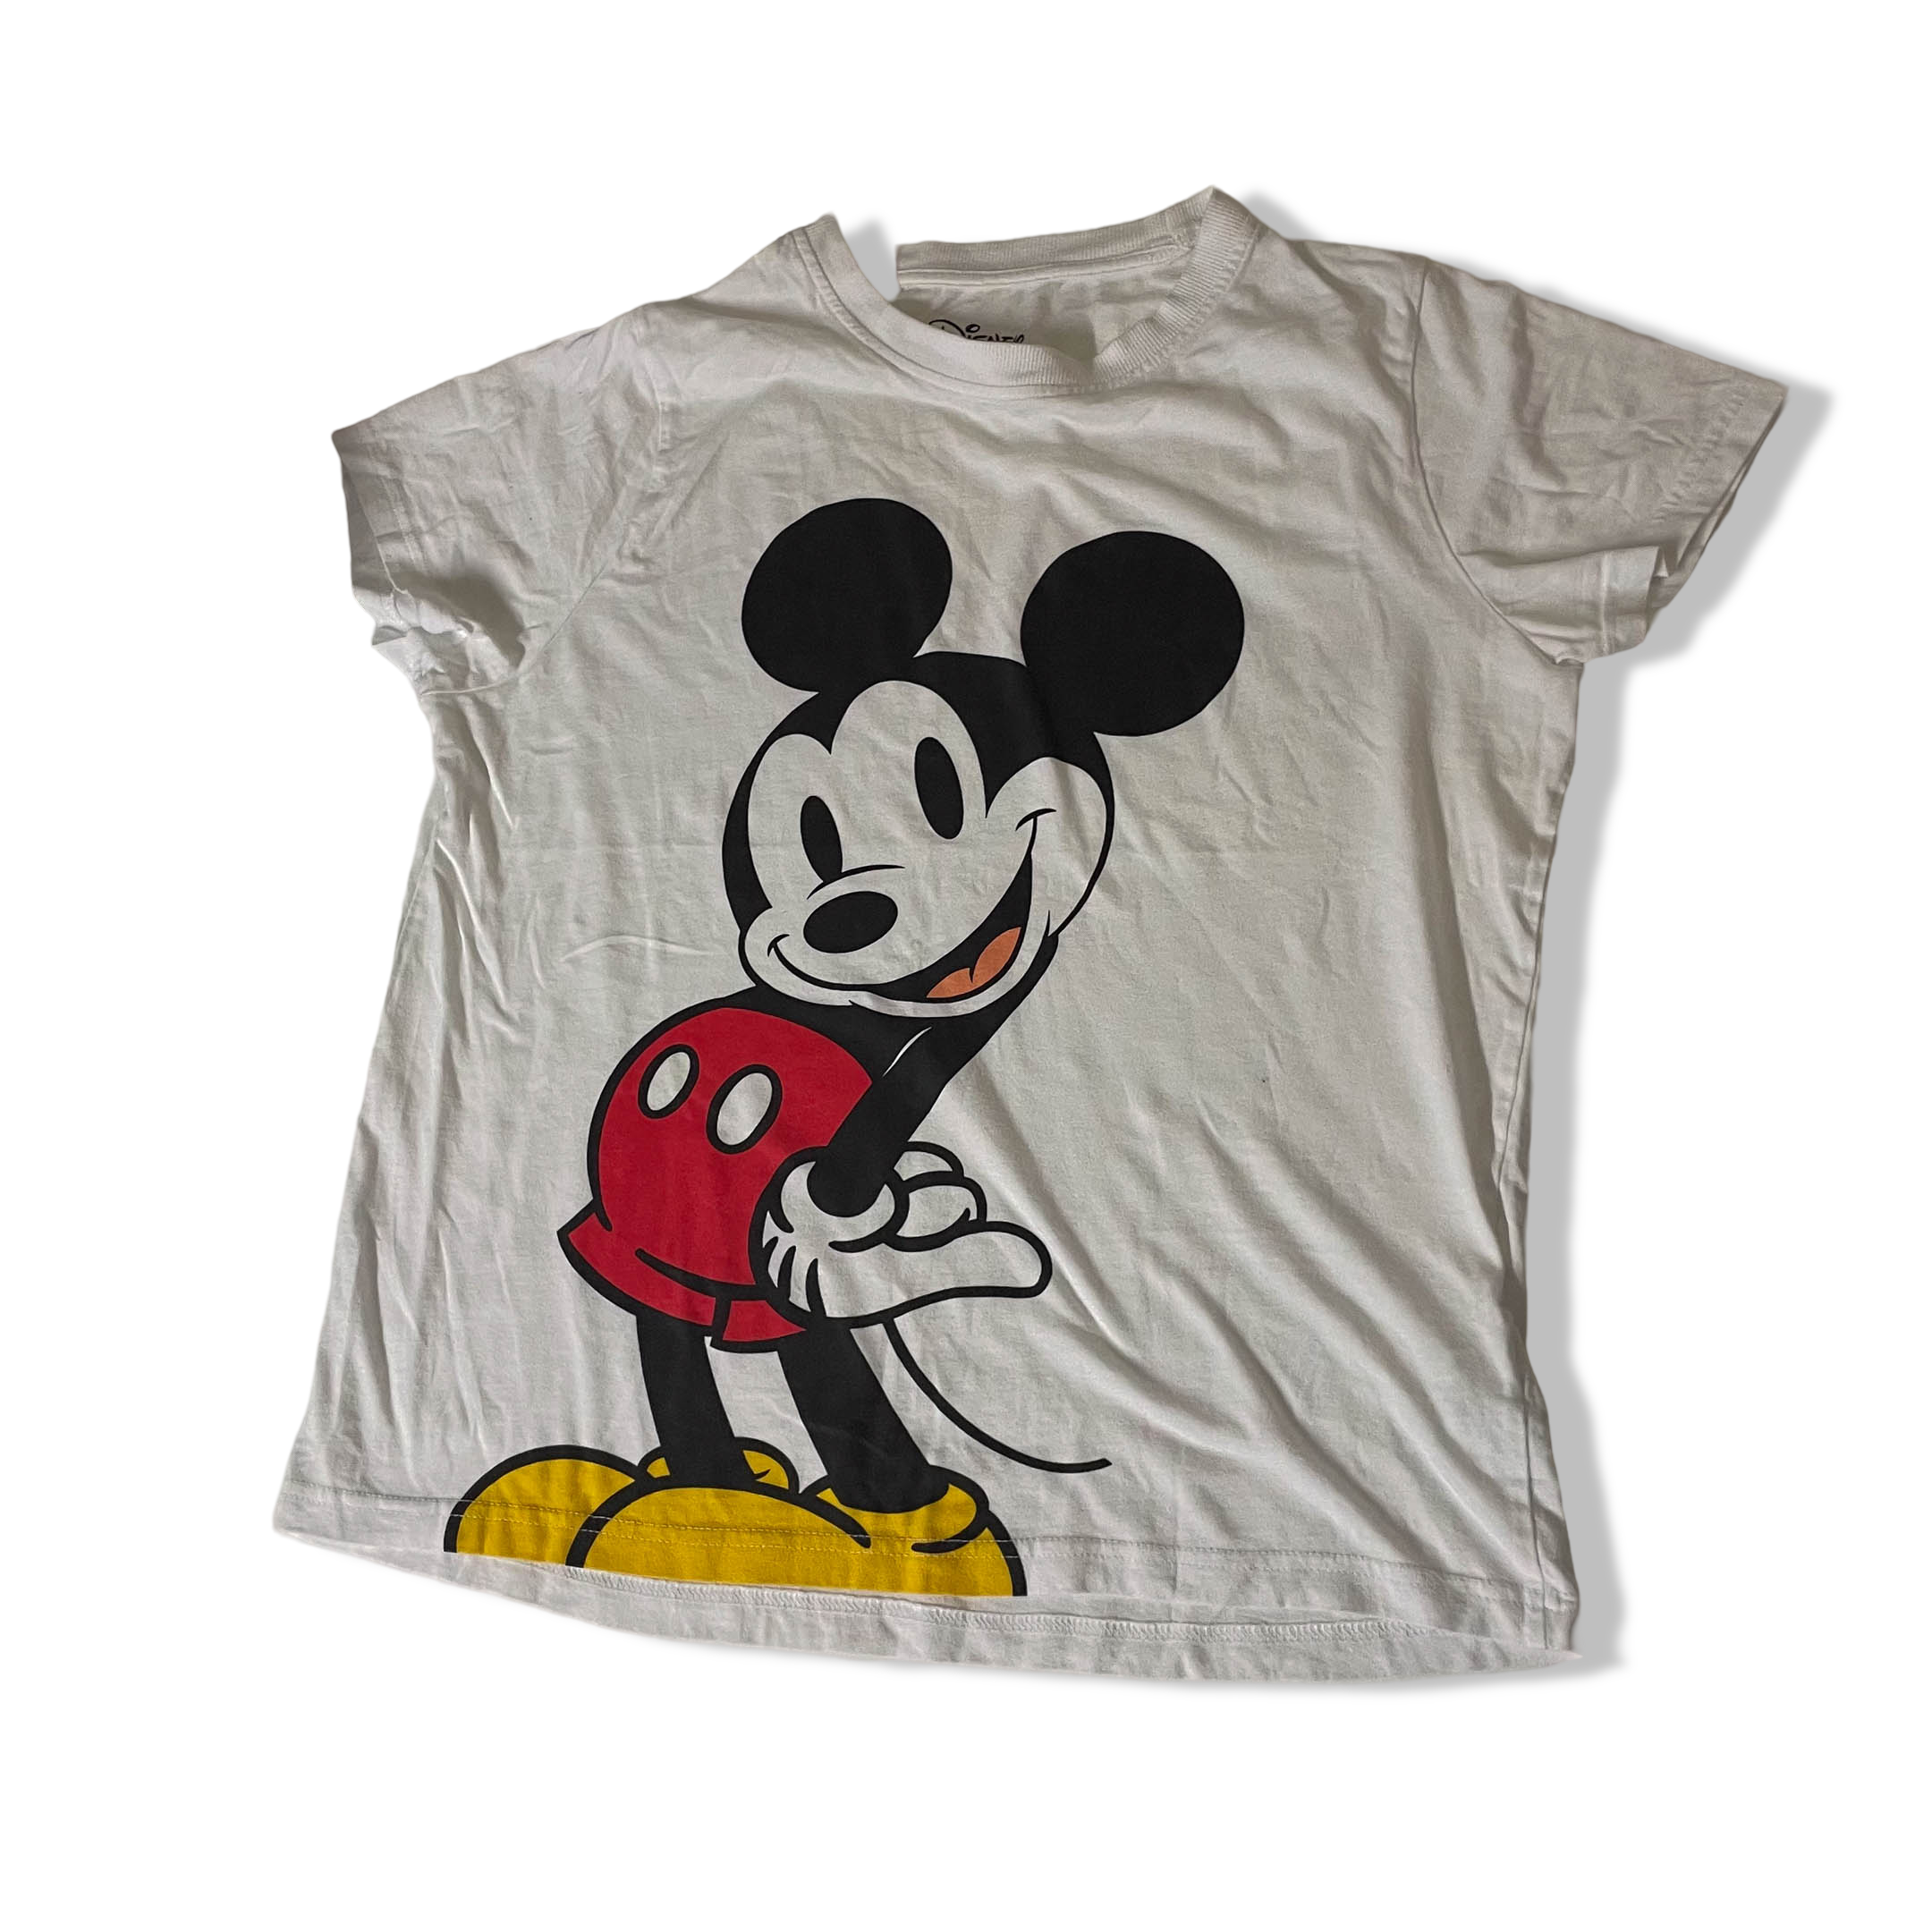 Vintage Disney women mickey mouse print white small tees| W 19 L 24| SKU 3713